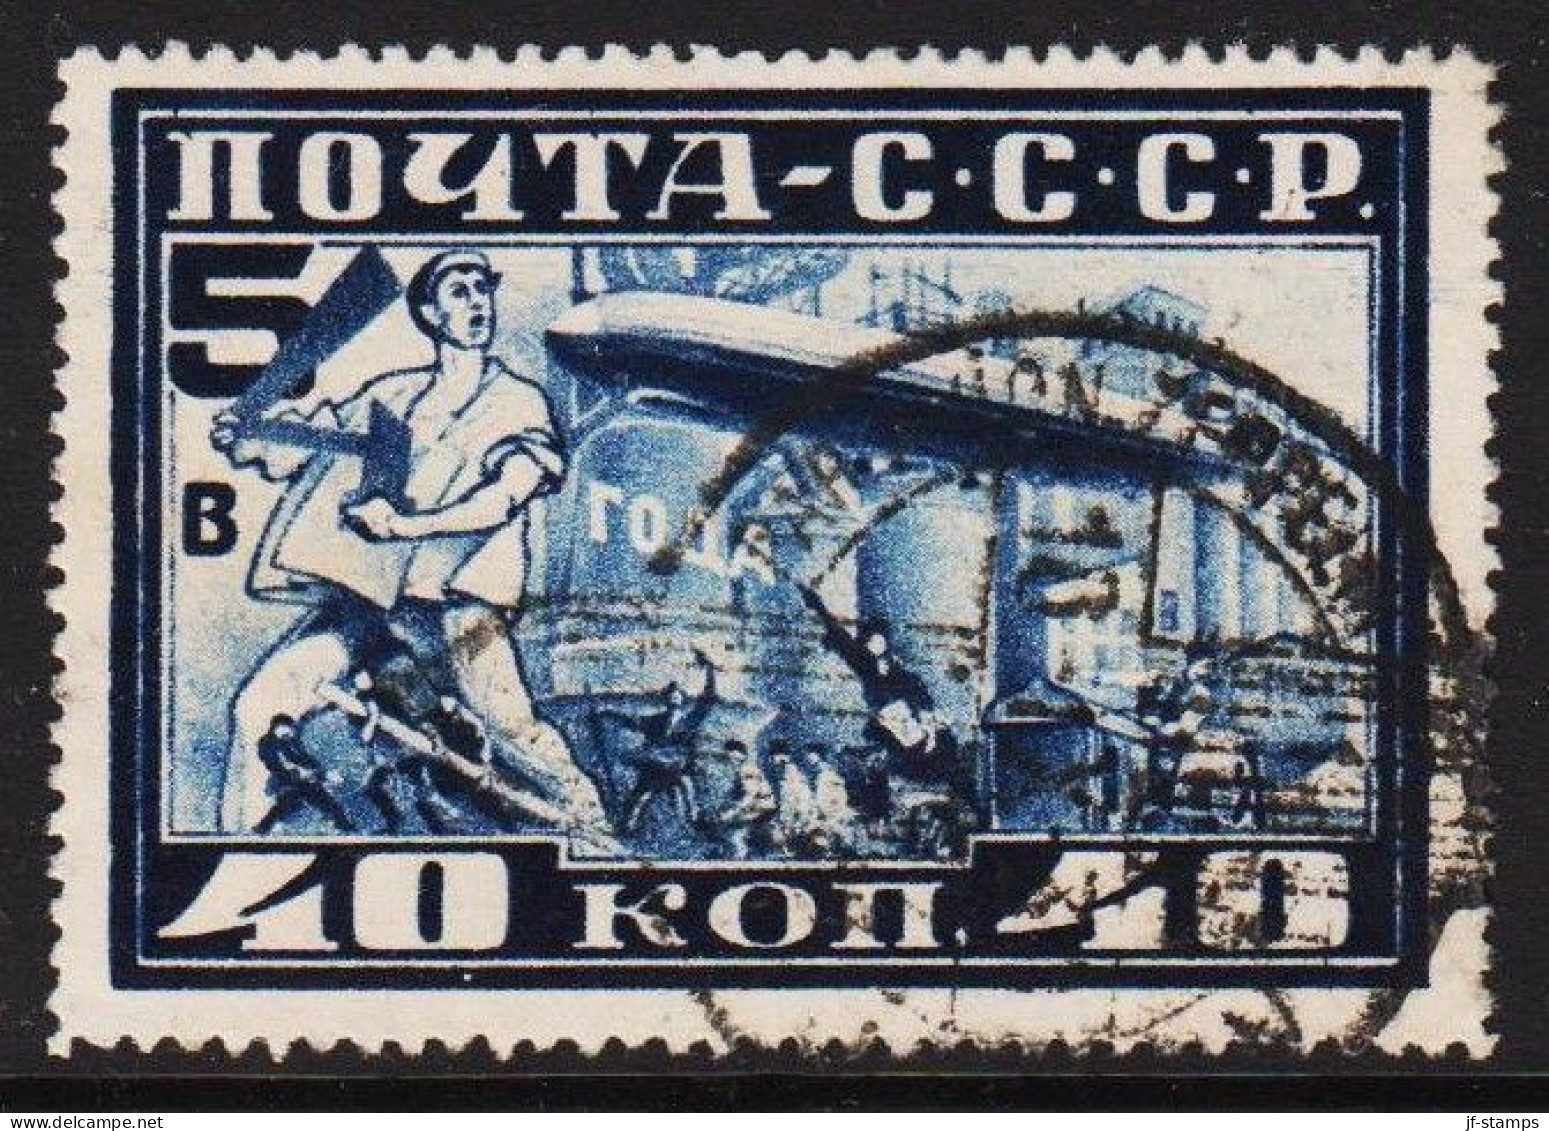 1930. SOVJET. Graf Zeppelin. 40 K. Perf. 12½. Fine ZEPPELIN CANCEL. (Michel 390 A) - JF542607 - Used Stamps